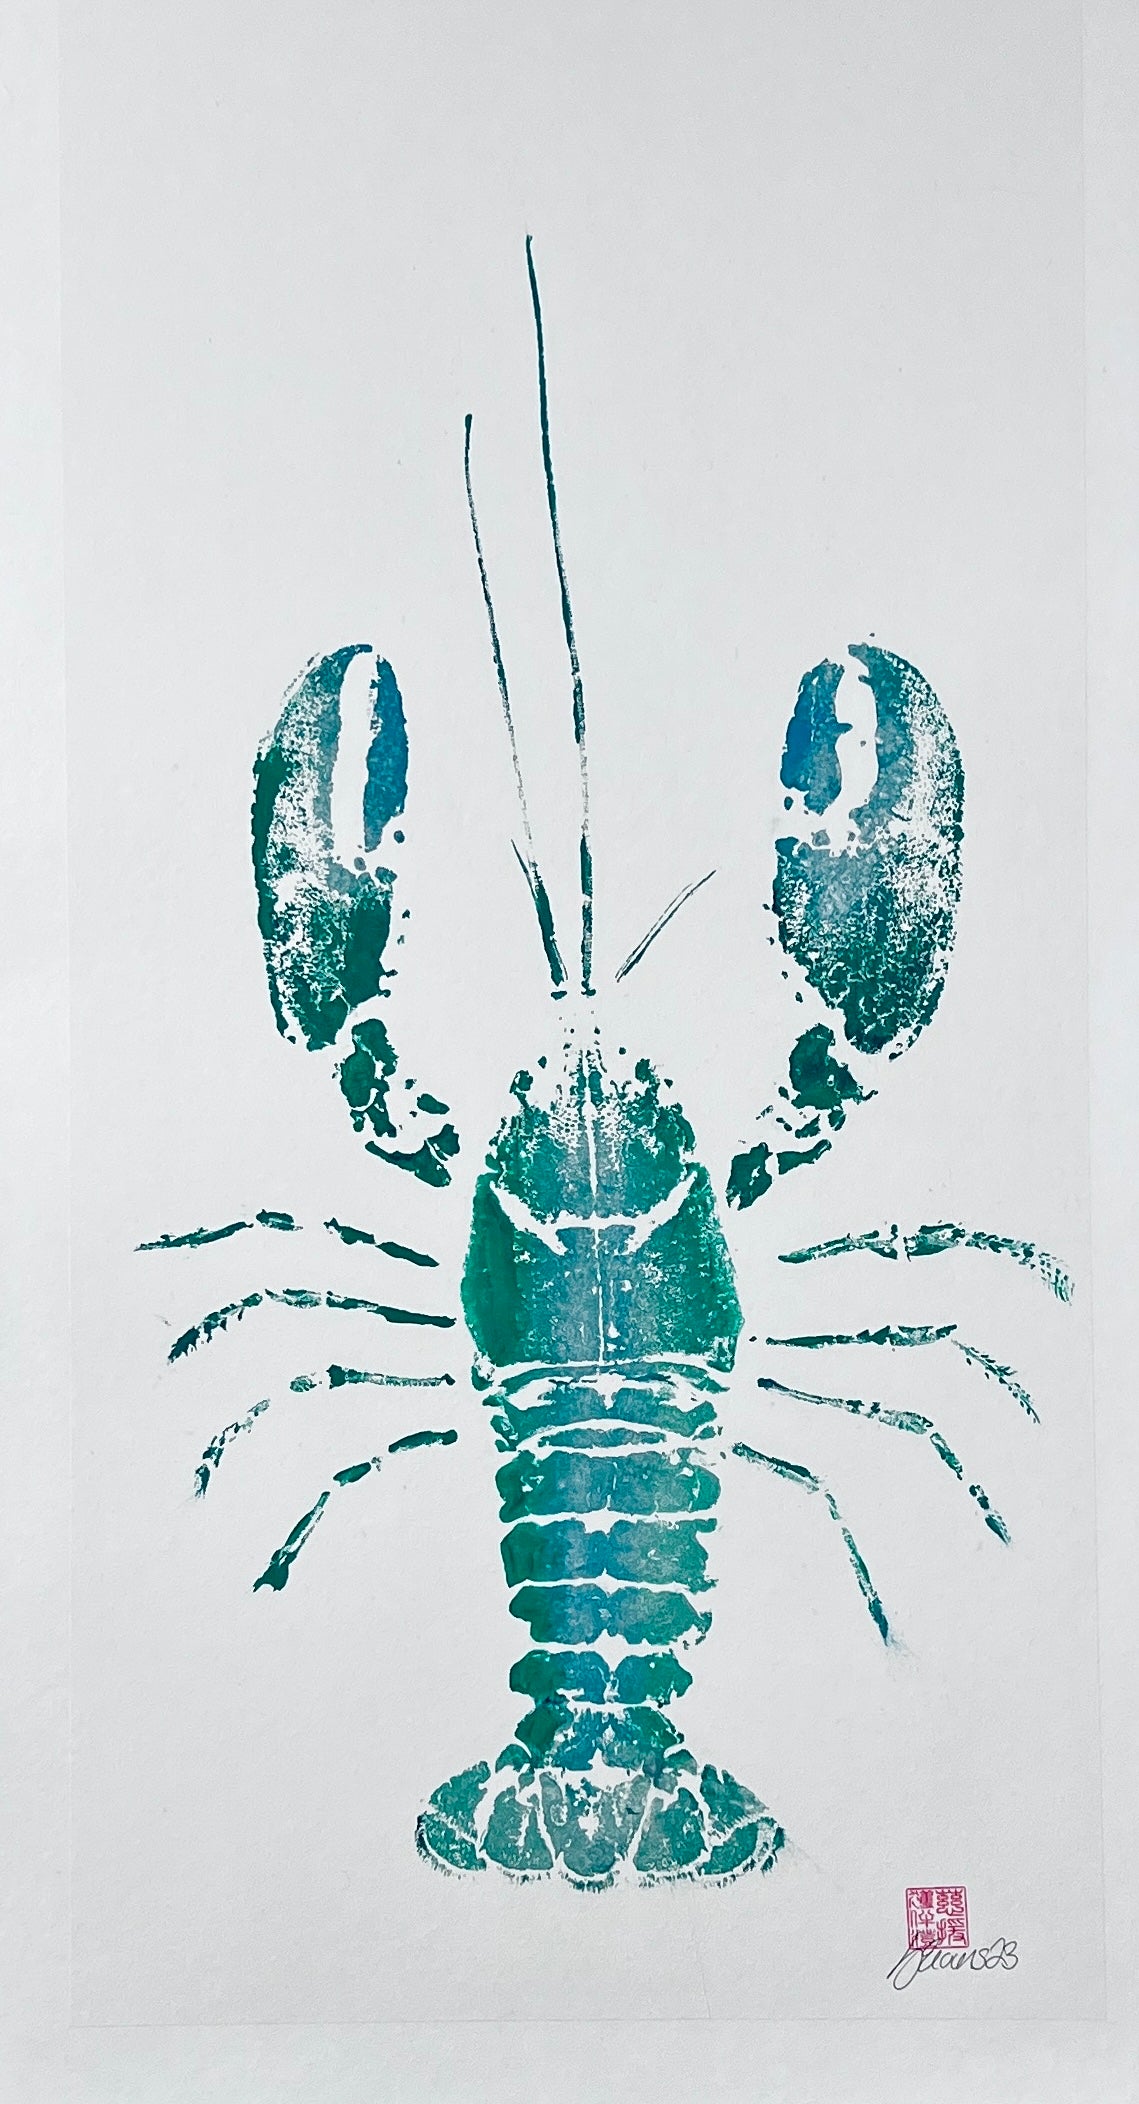 Menai Strait Lobster, Gyotaku Printed in Green Ink